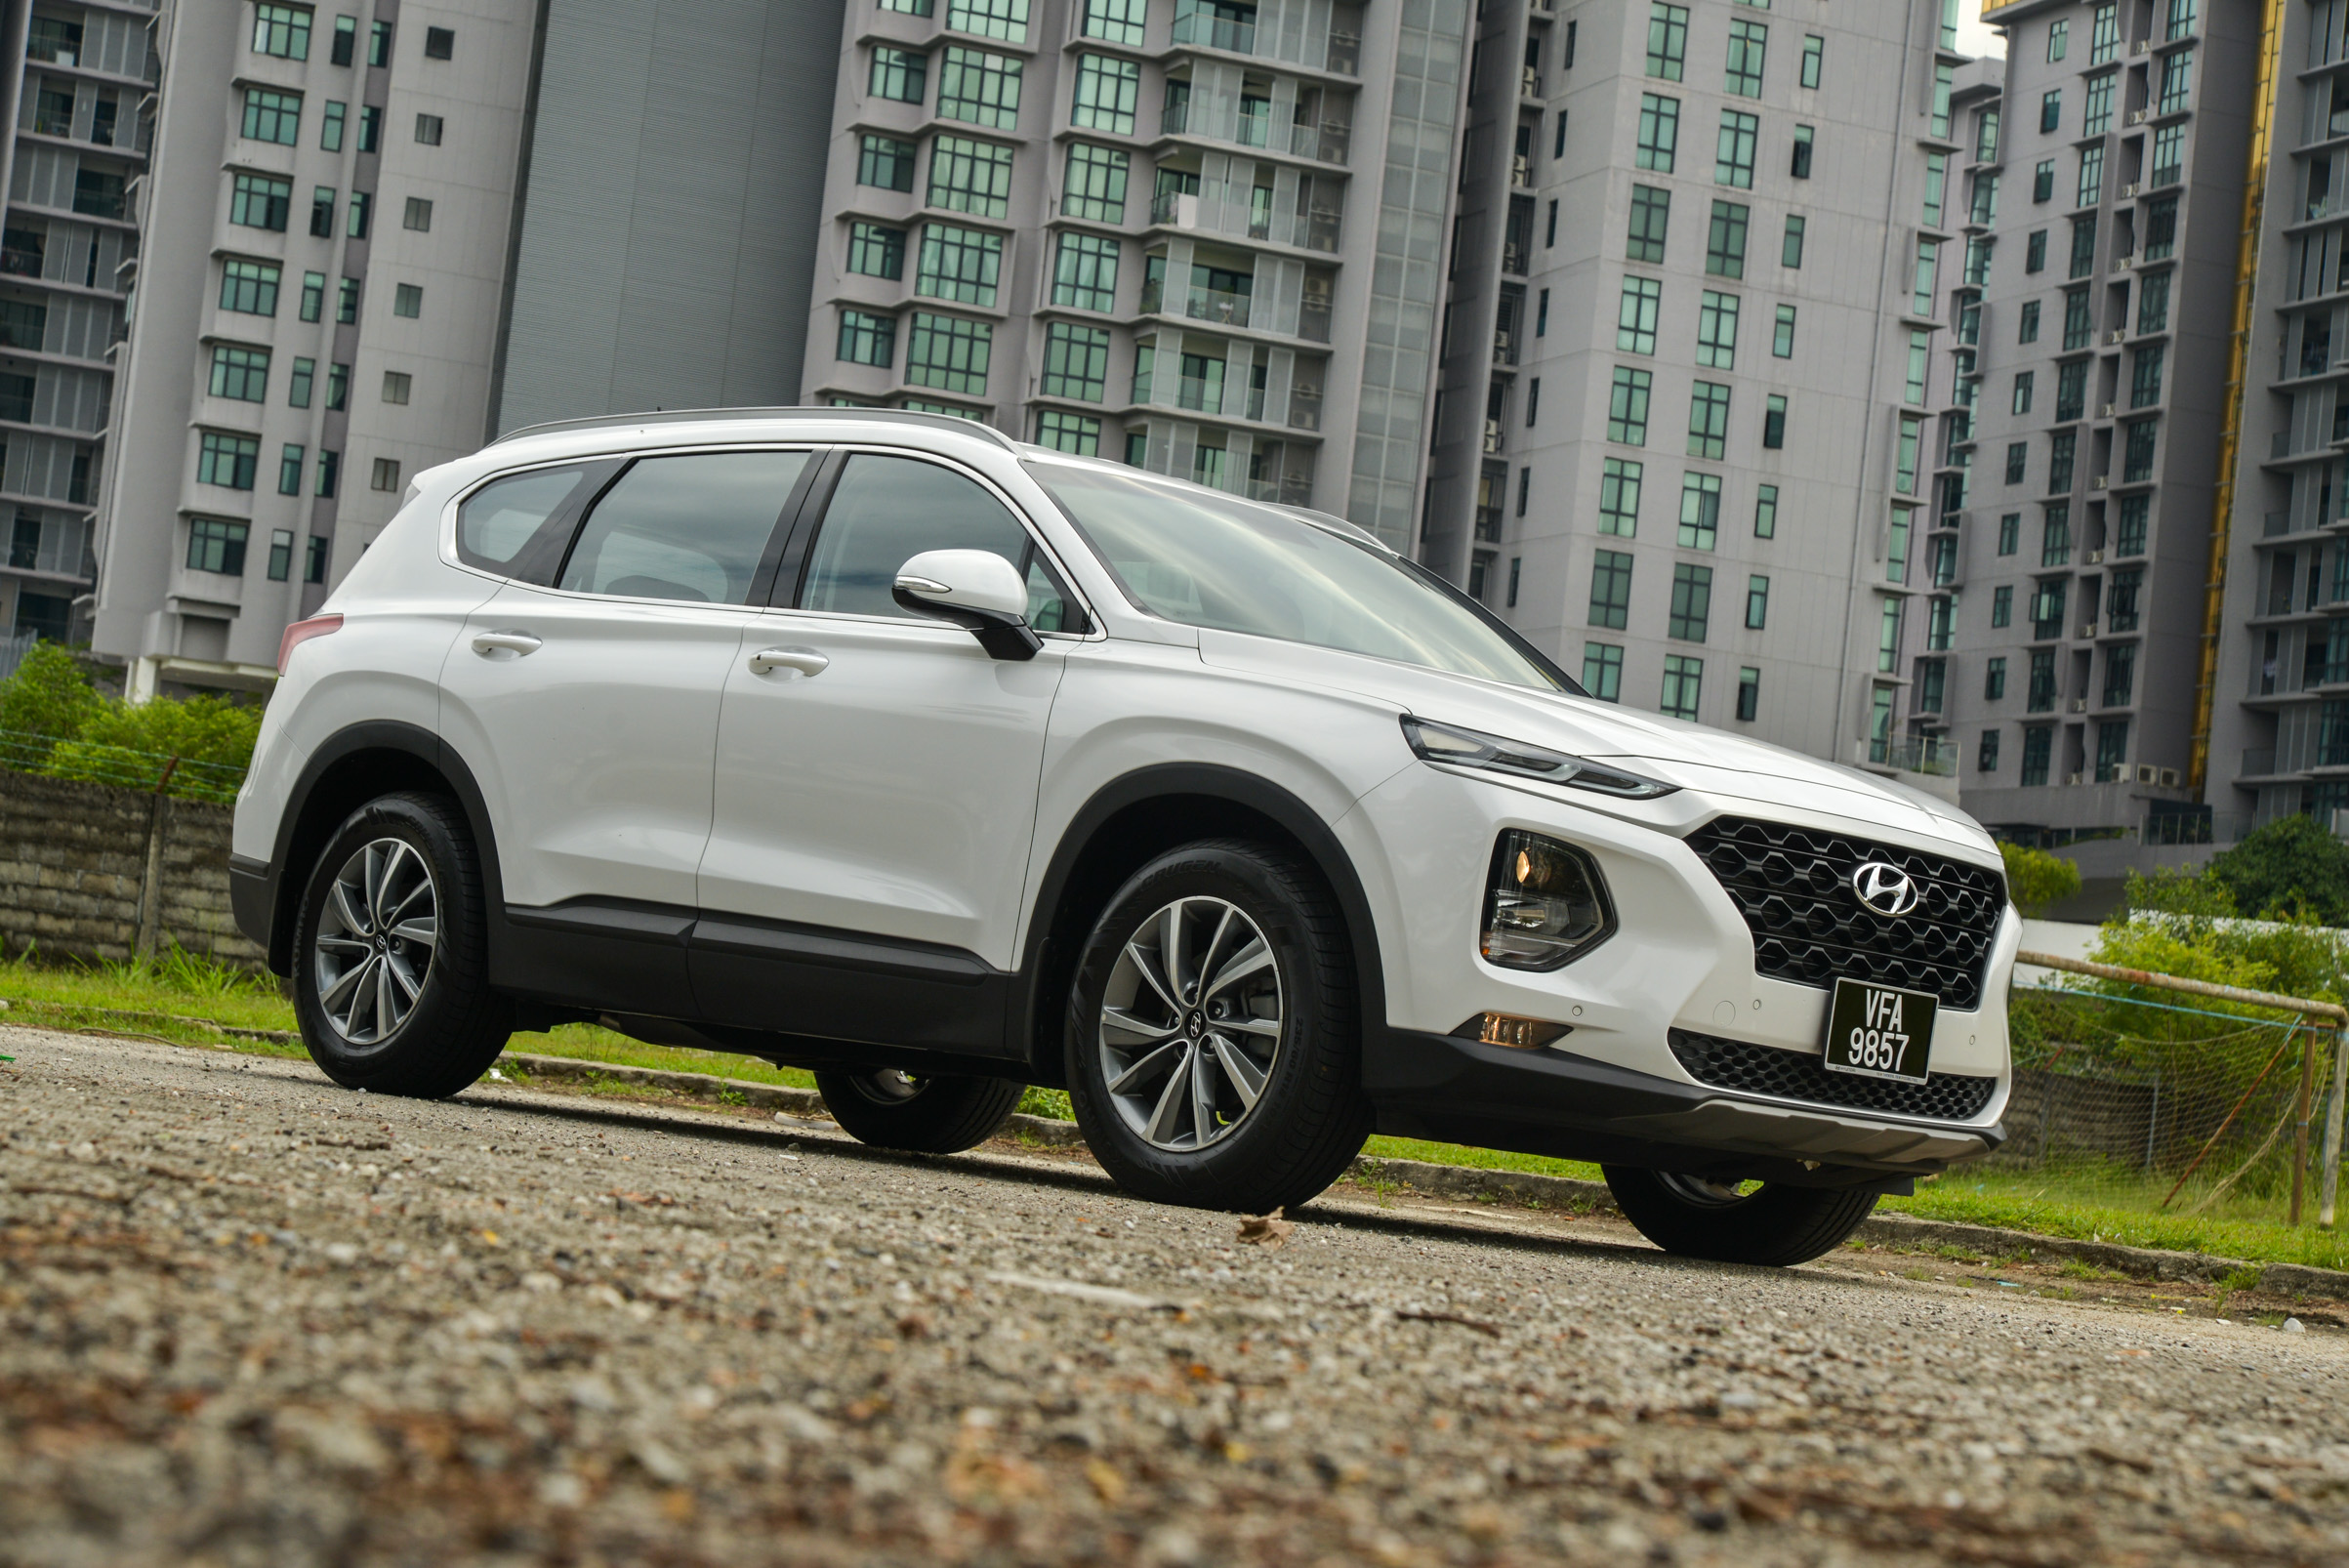 TopGear | 2020 Hyundai Santa Fe 2.4L Executive review: 'low spec' done ...